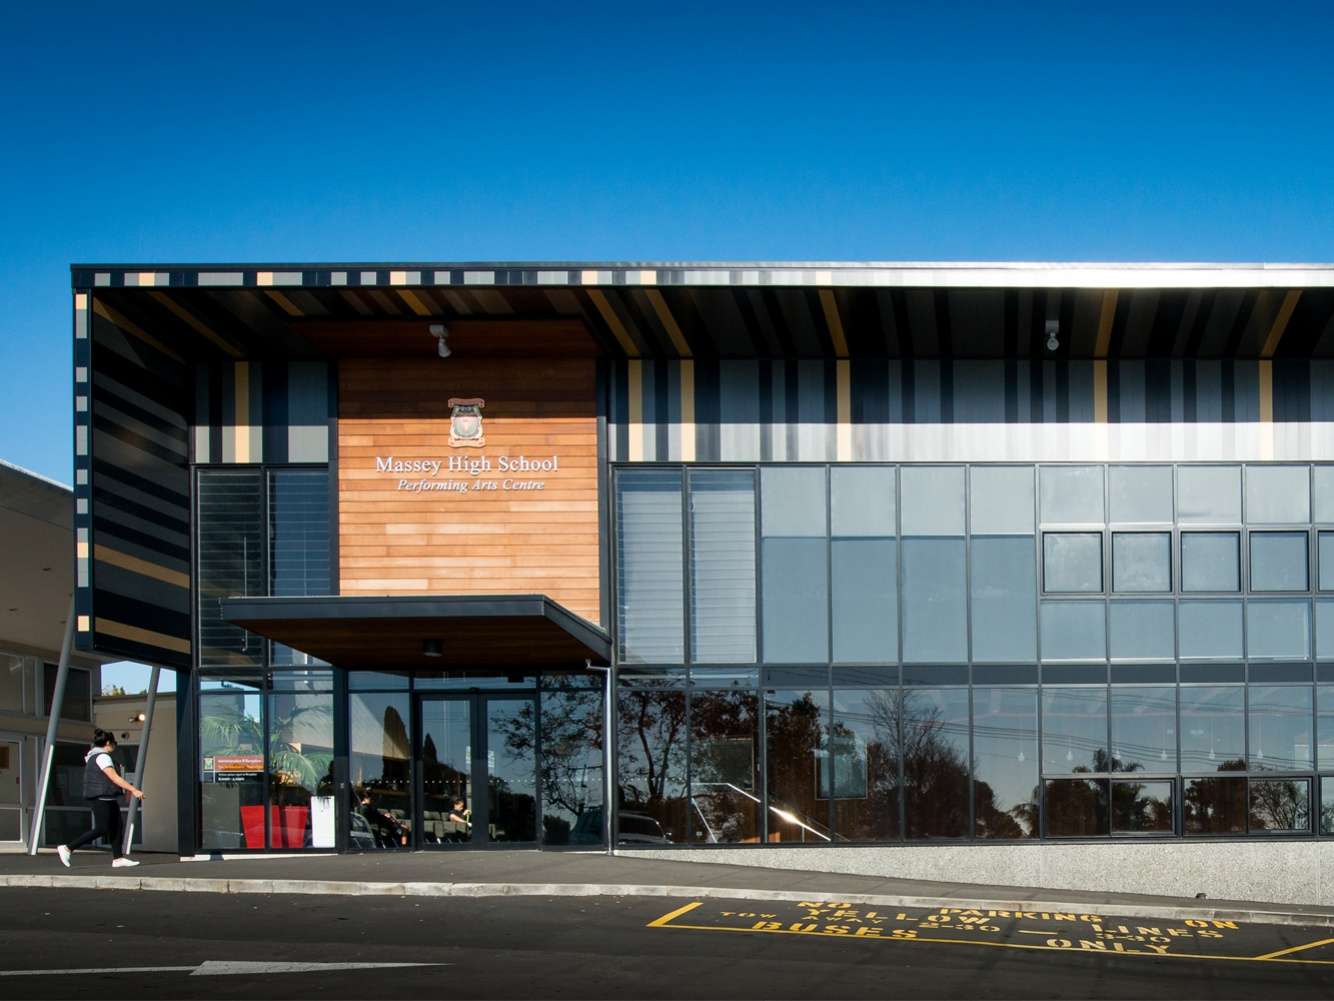 Inbox Design has been selected to design & build a new website for Massey High School in Auckland image